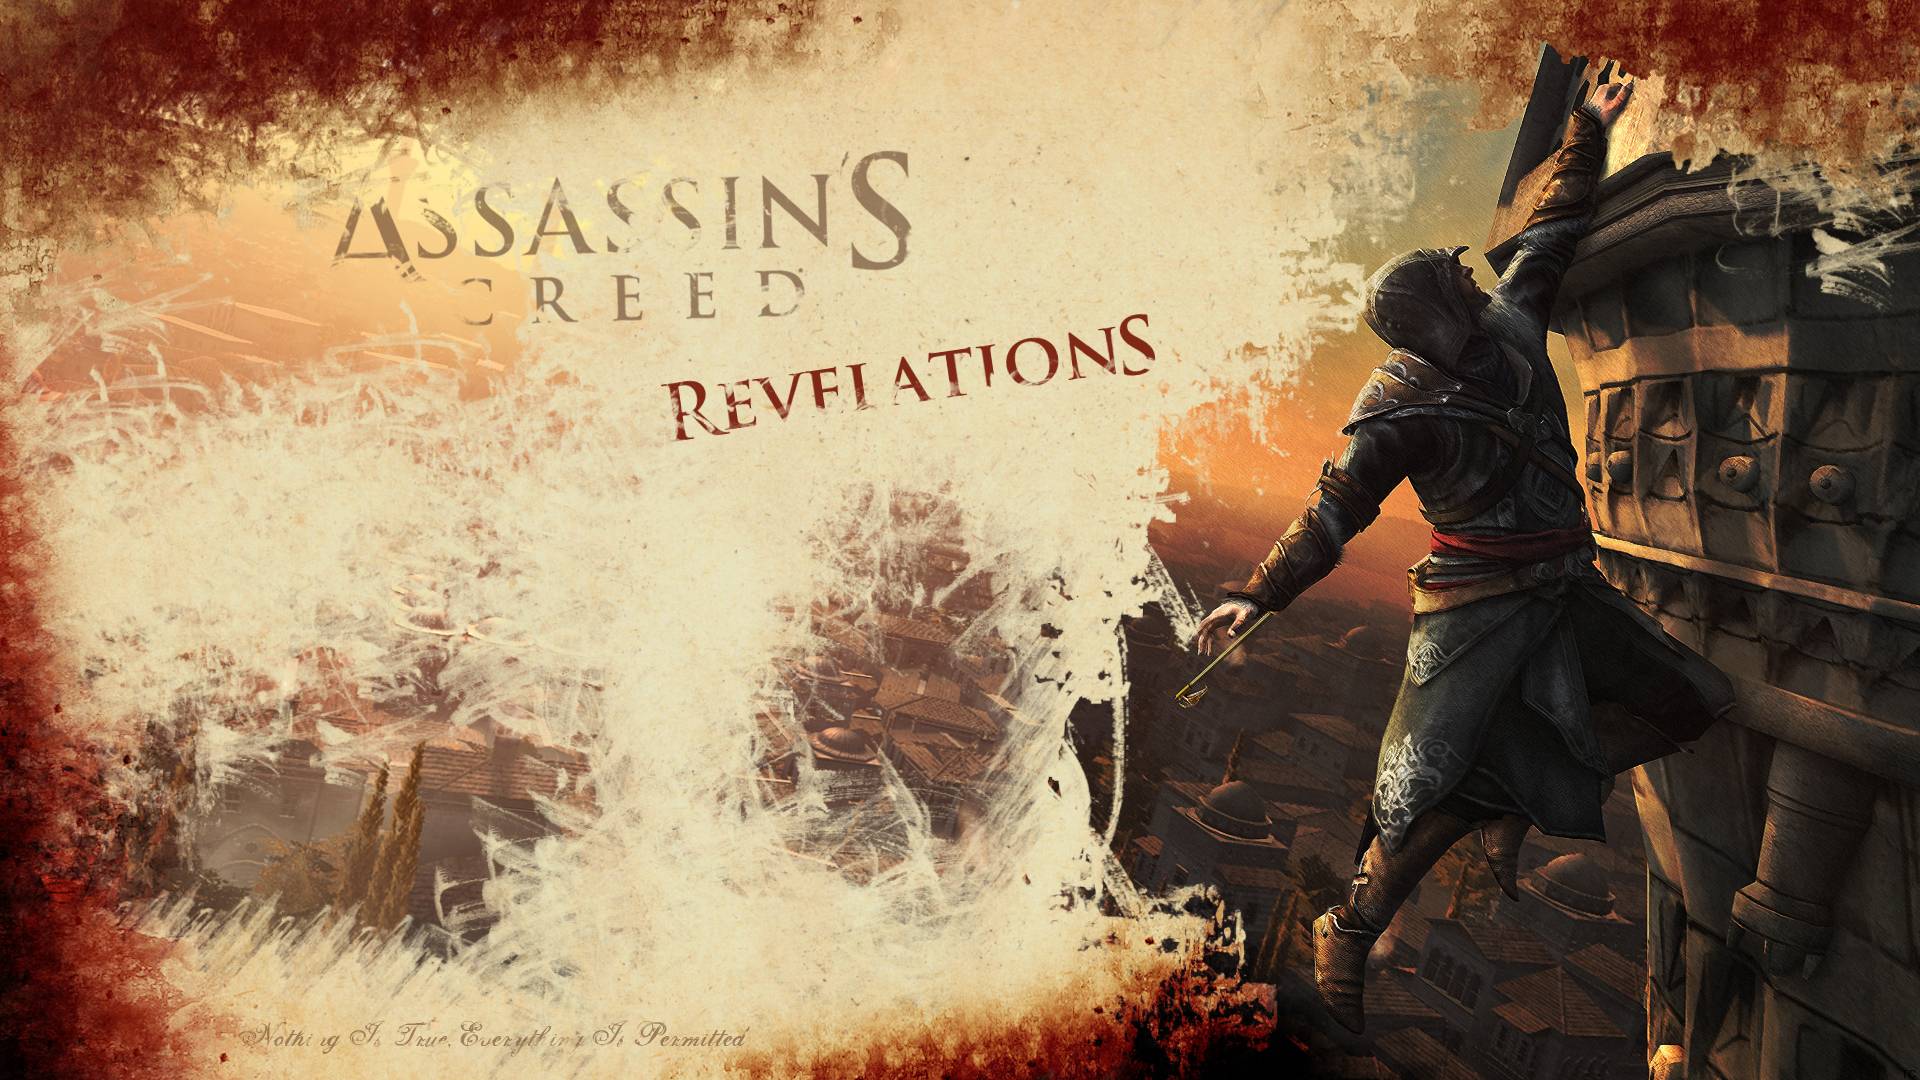 download assassins creed revelations